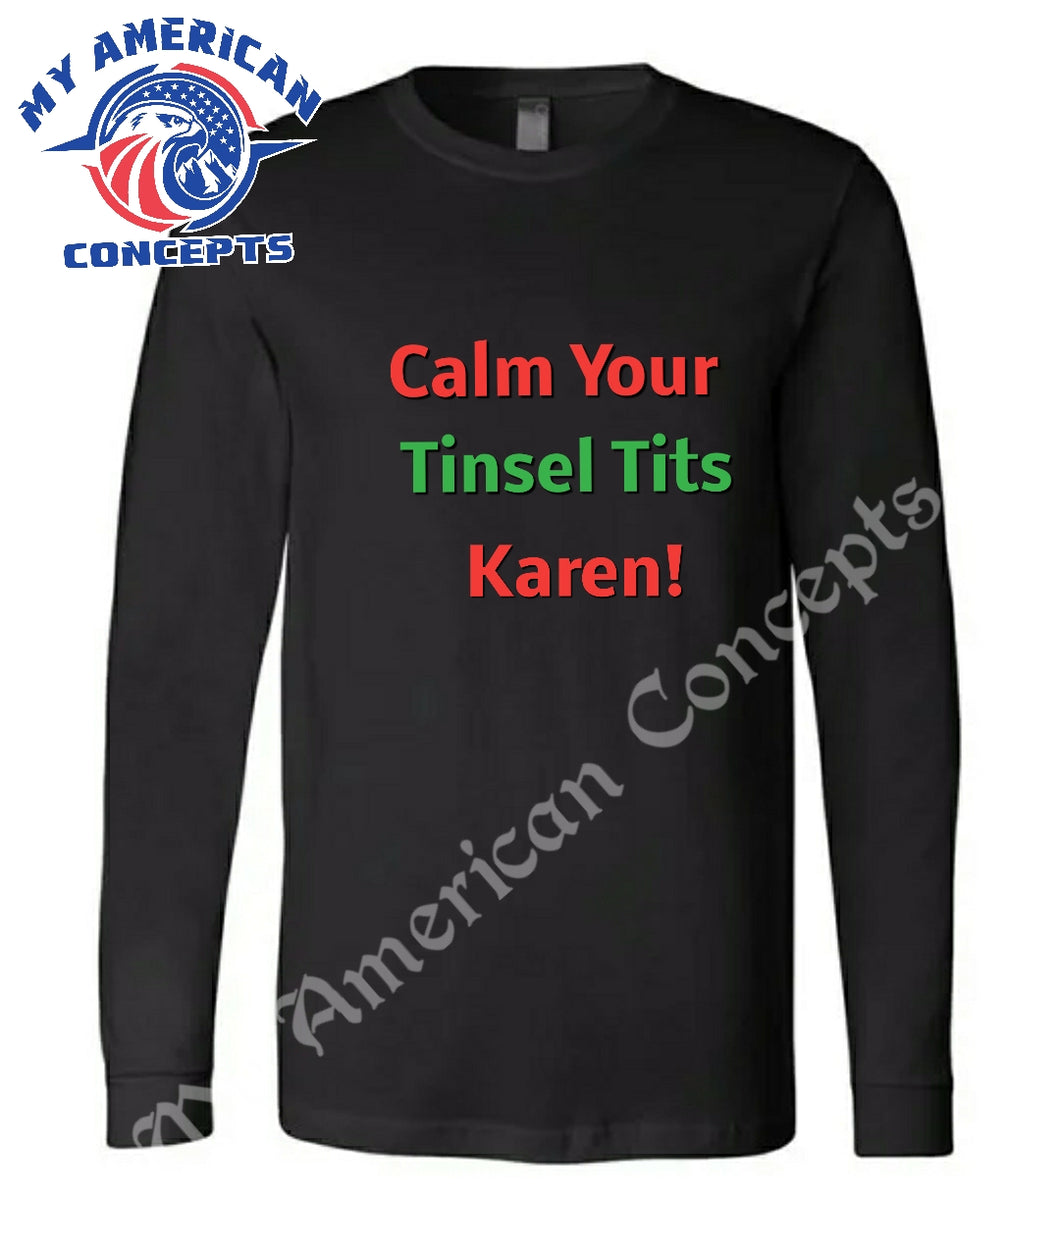 Calm Your Tinsel T*ts Karen!